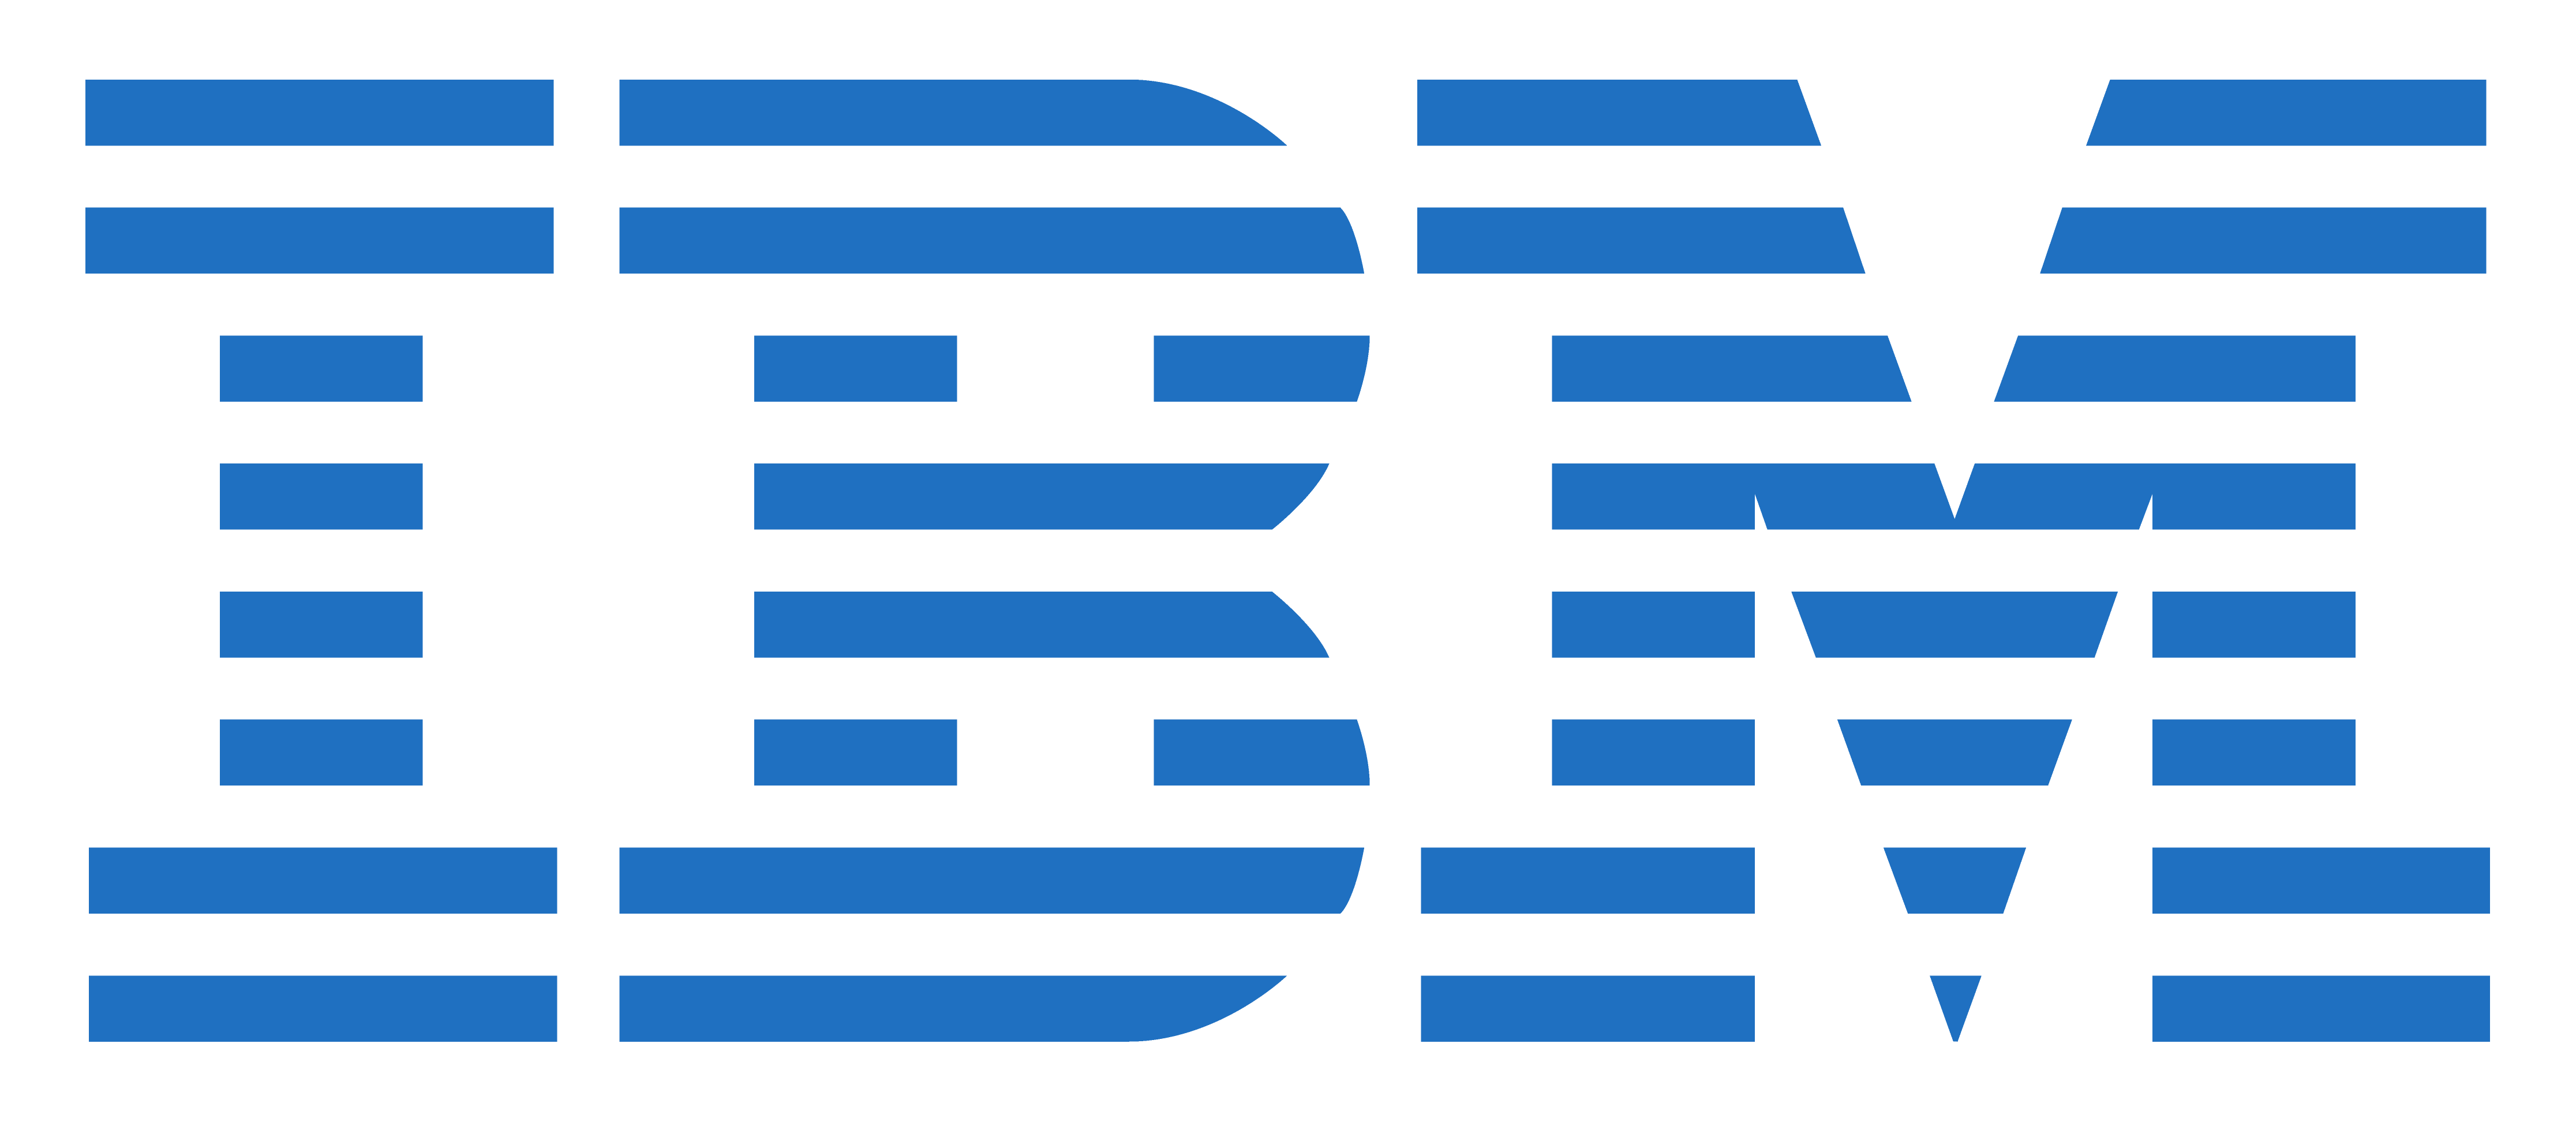 IBM remote employees